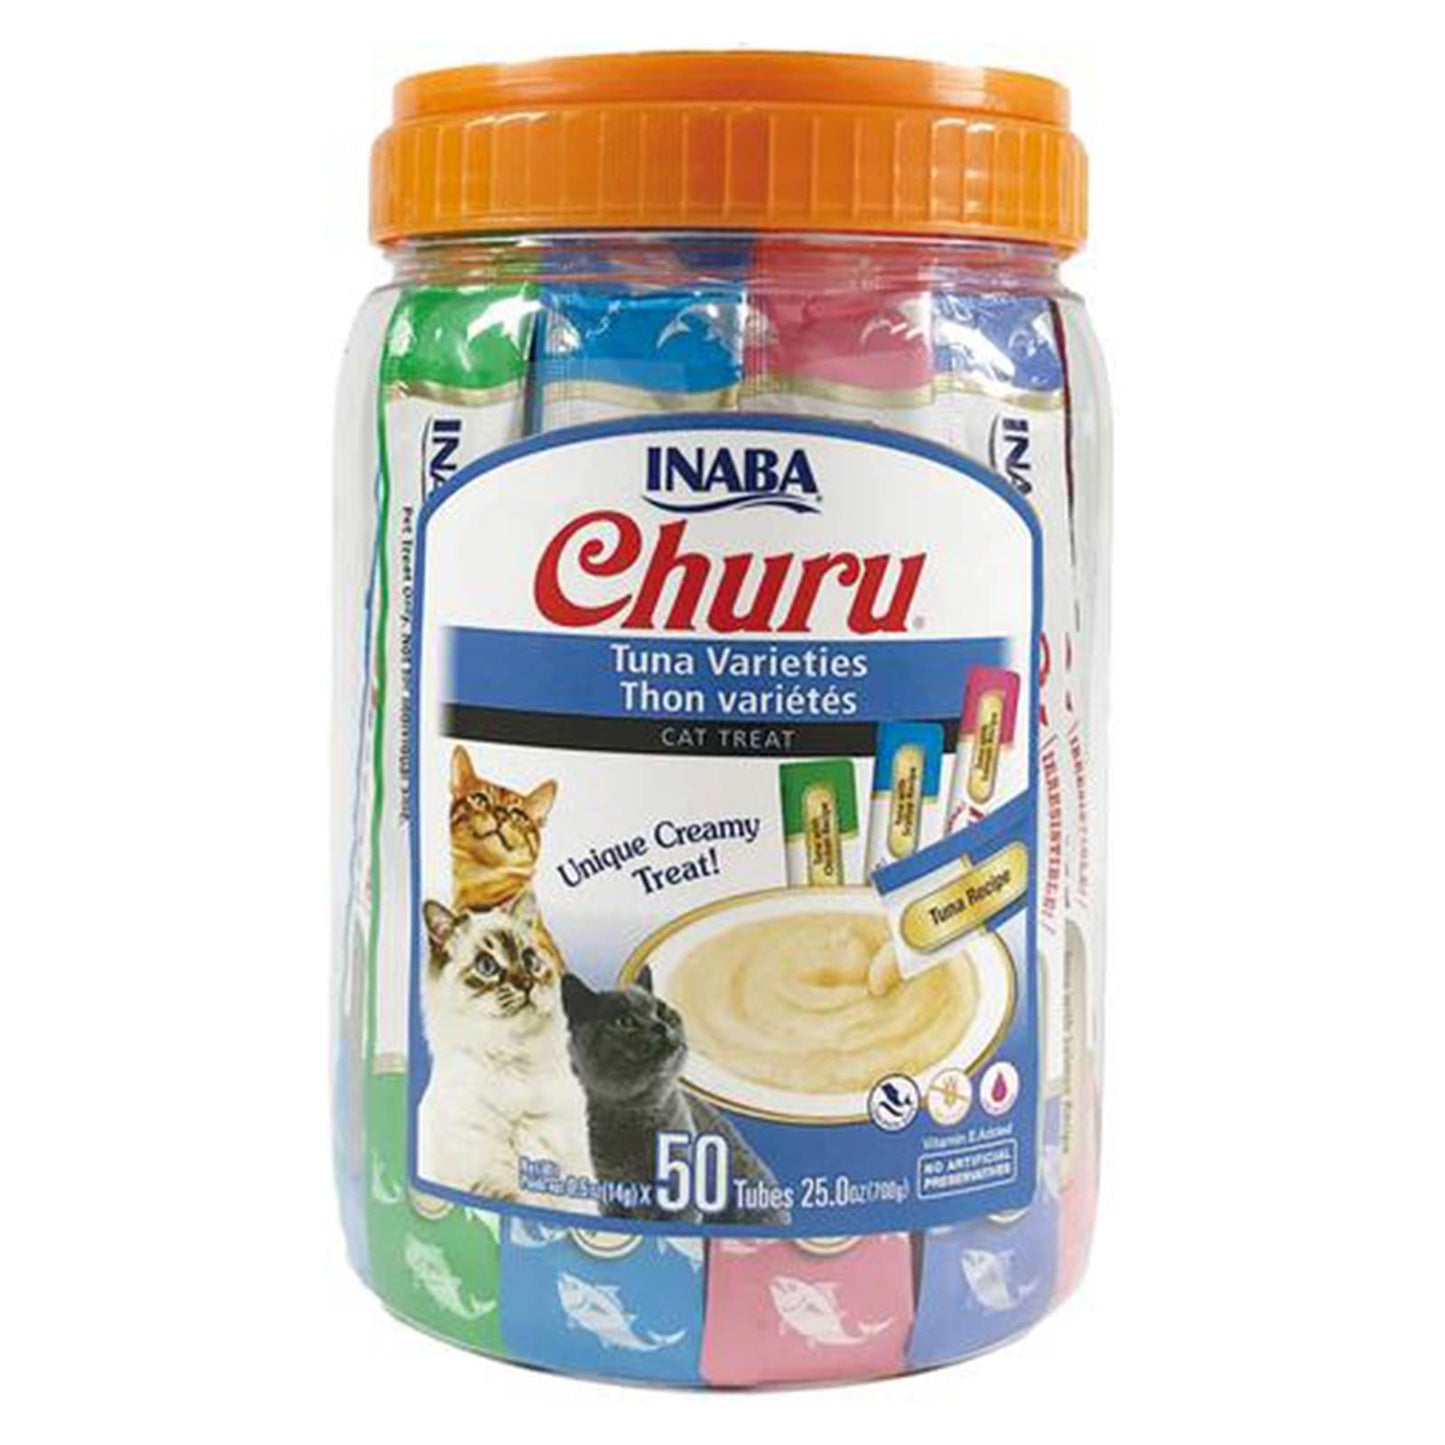 Inaba Churu Creamy Puree Tuna Varieties Tub Cat Treat Tubes 50 Pack 700gm